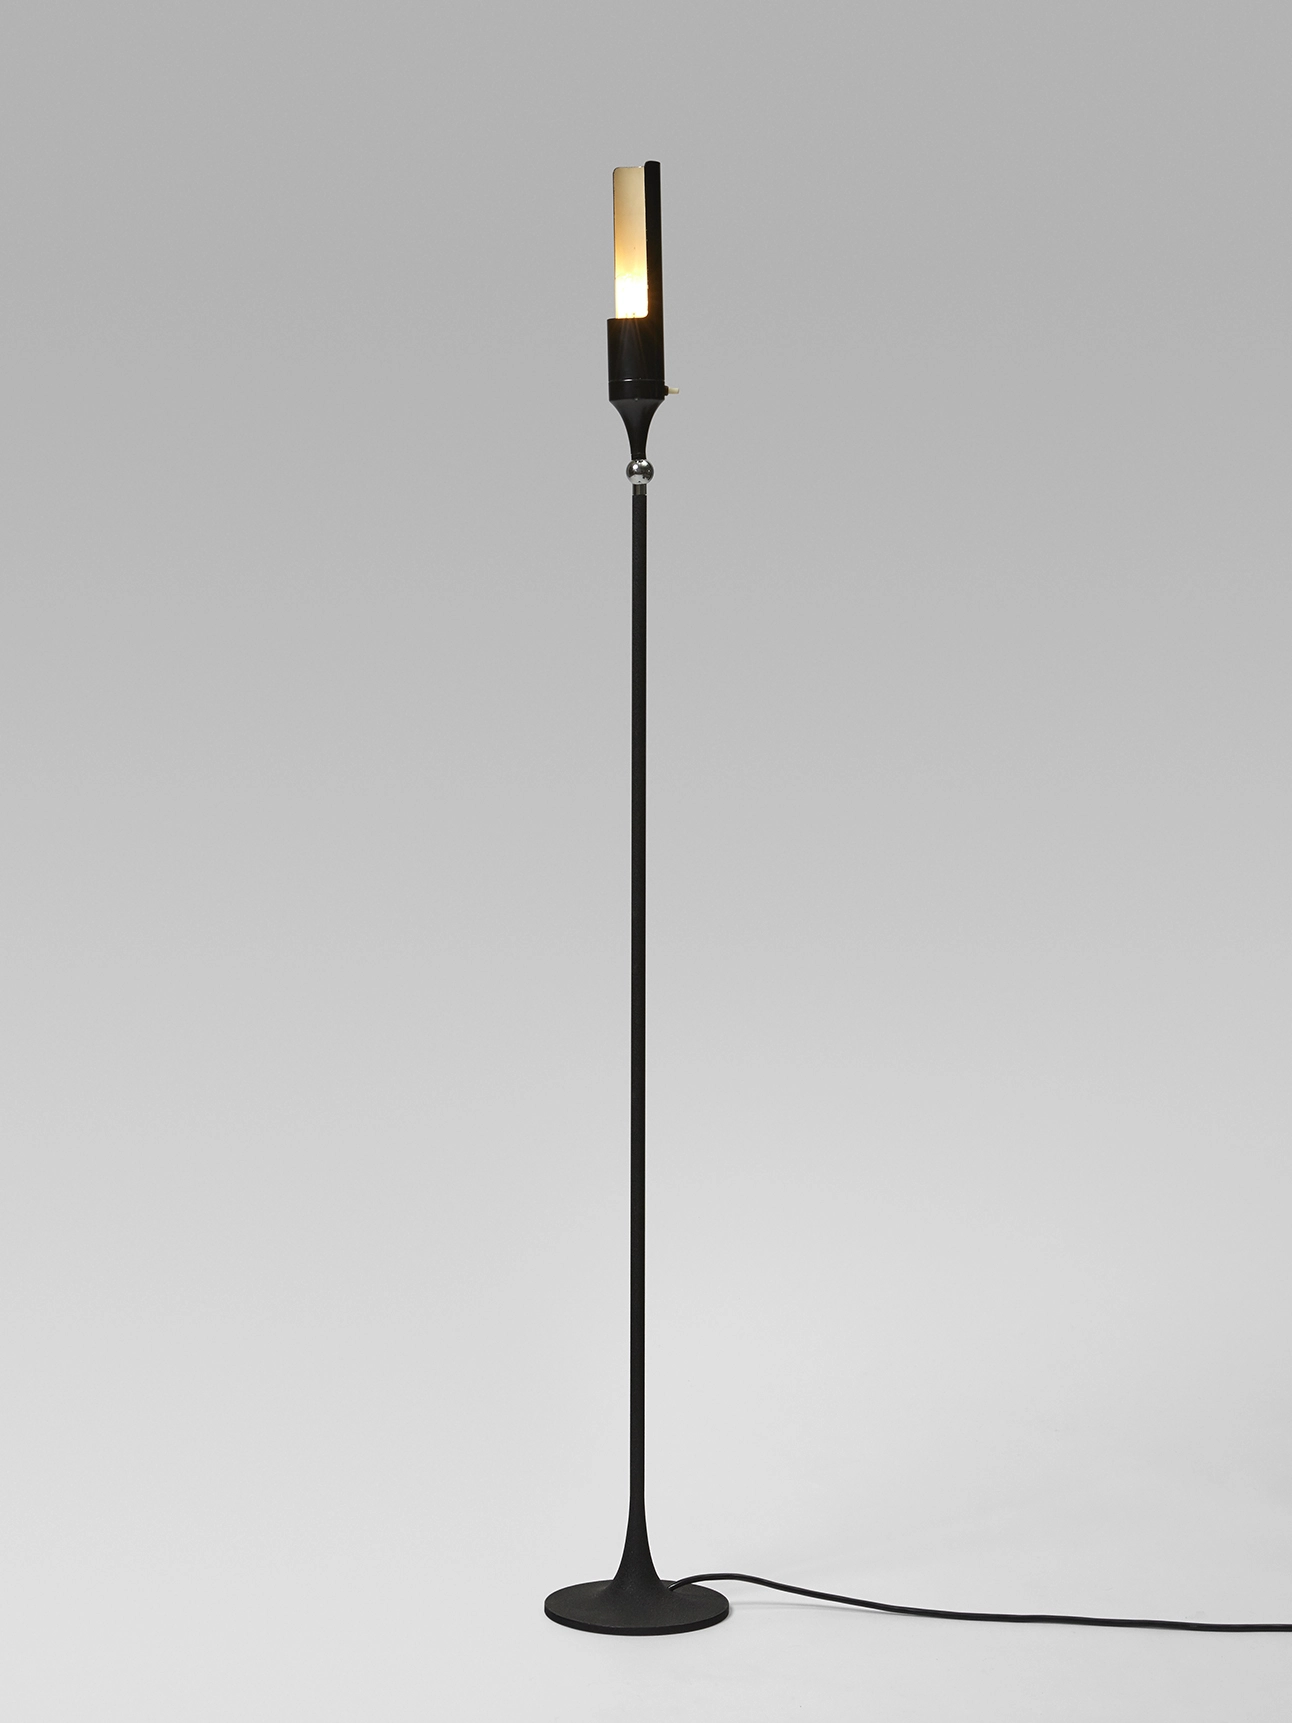 1086 - Gino Sarfatti - Floor light - Galerie kreo